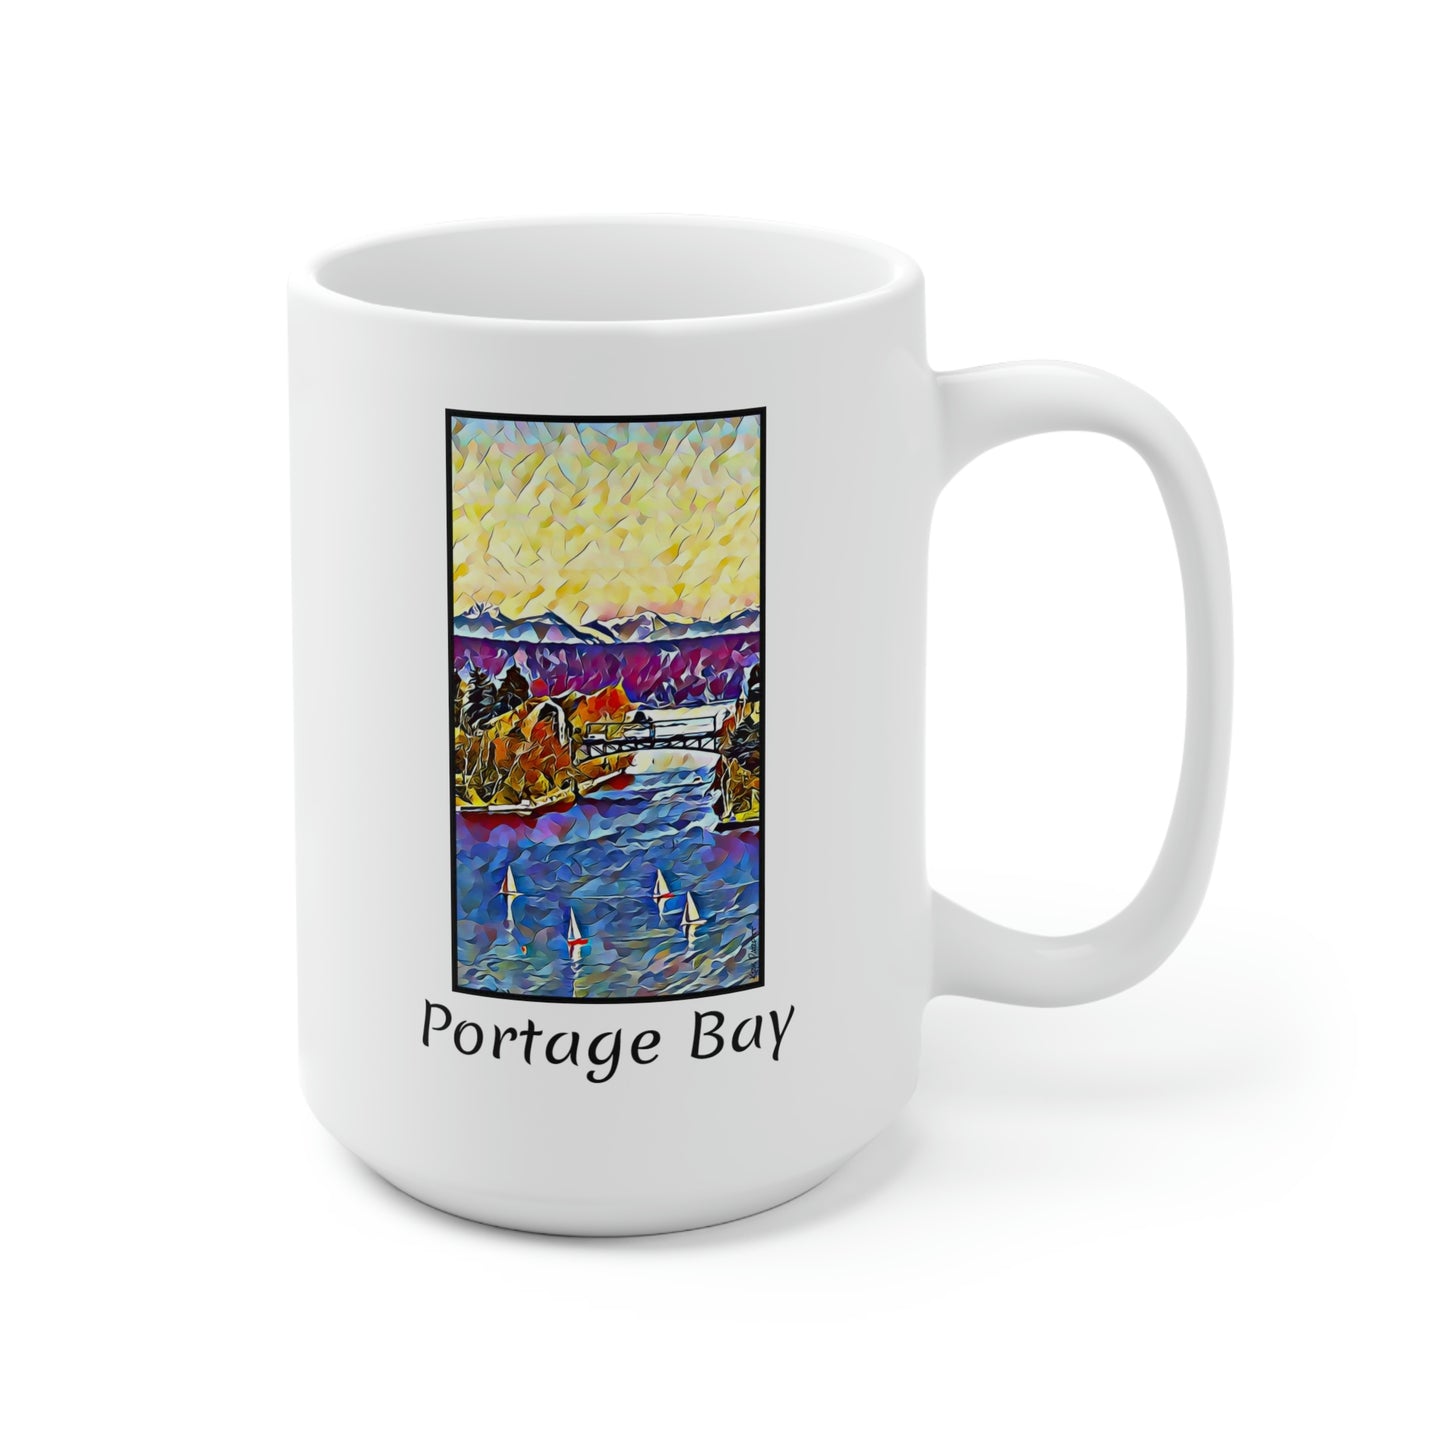 15oz - Portage Bay Ceramic Mug